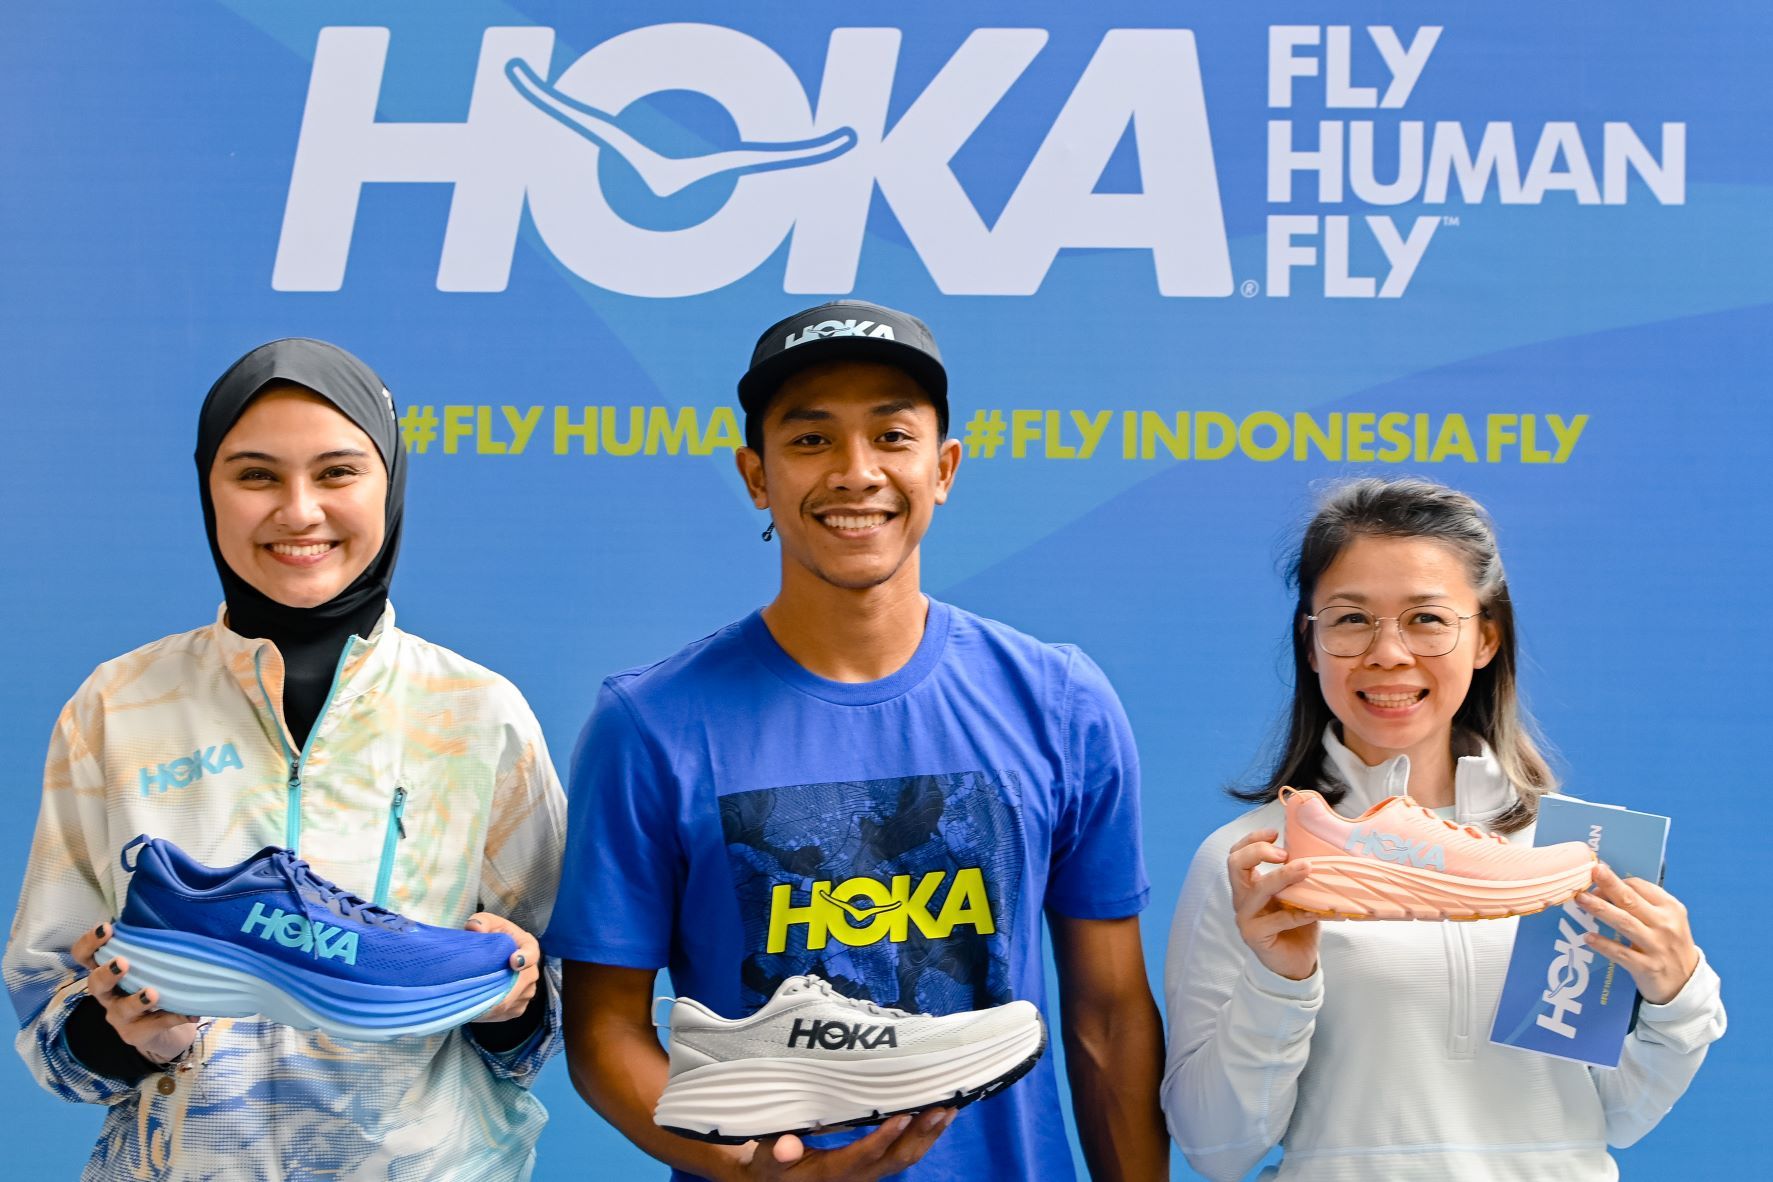 HOKA Luncurkan Sepatu Terbaru dan Kampanye 'Fly Human Fly'